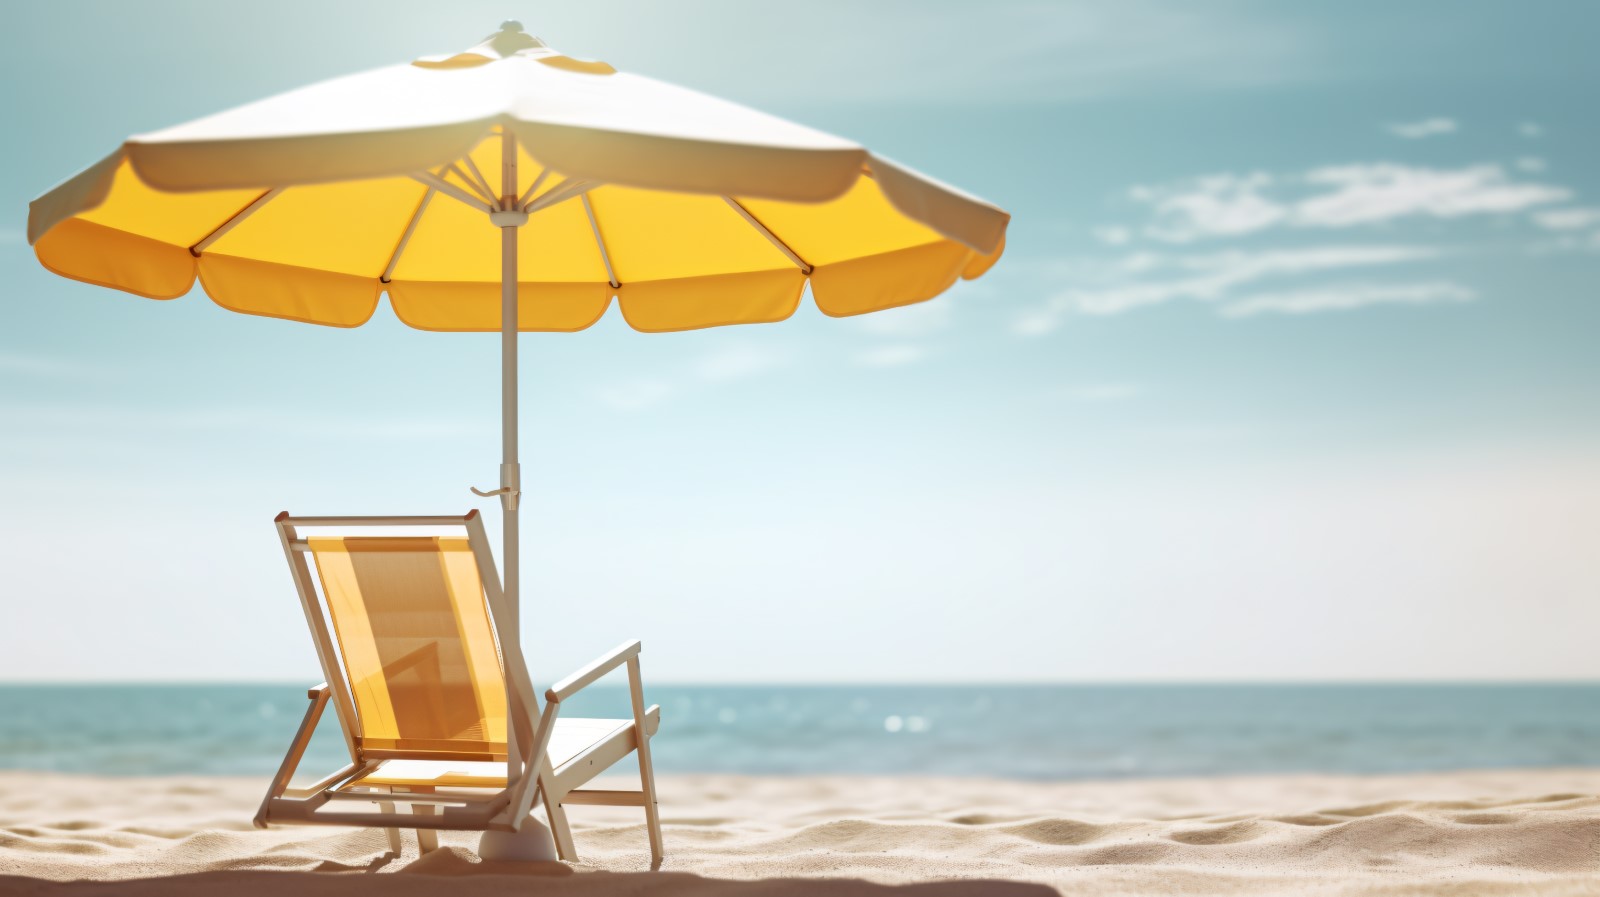 Beach summer Outdoor Beach chair with Yellow umbrella sunny day 258